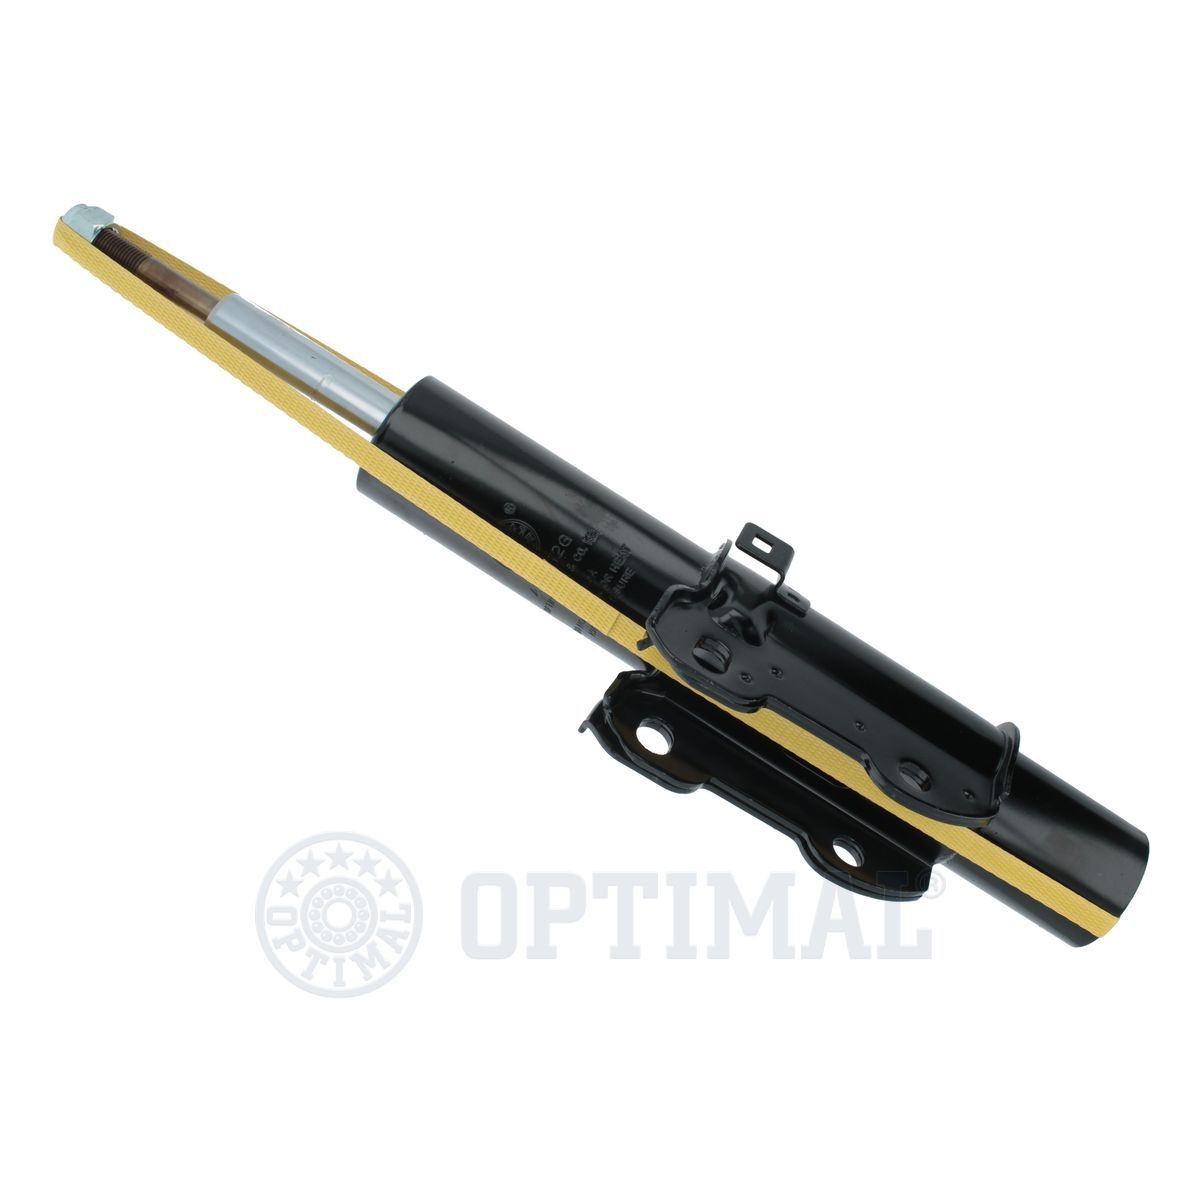 OPTIMAL A-3712G Shock absorber A906 320 04 33